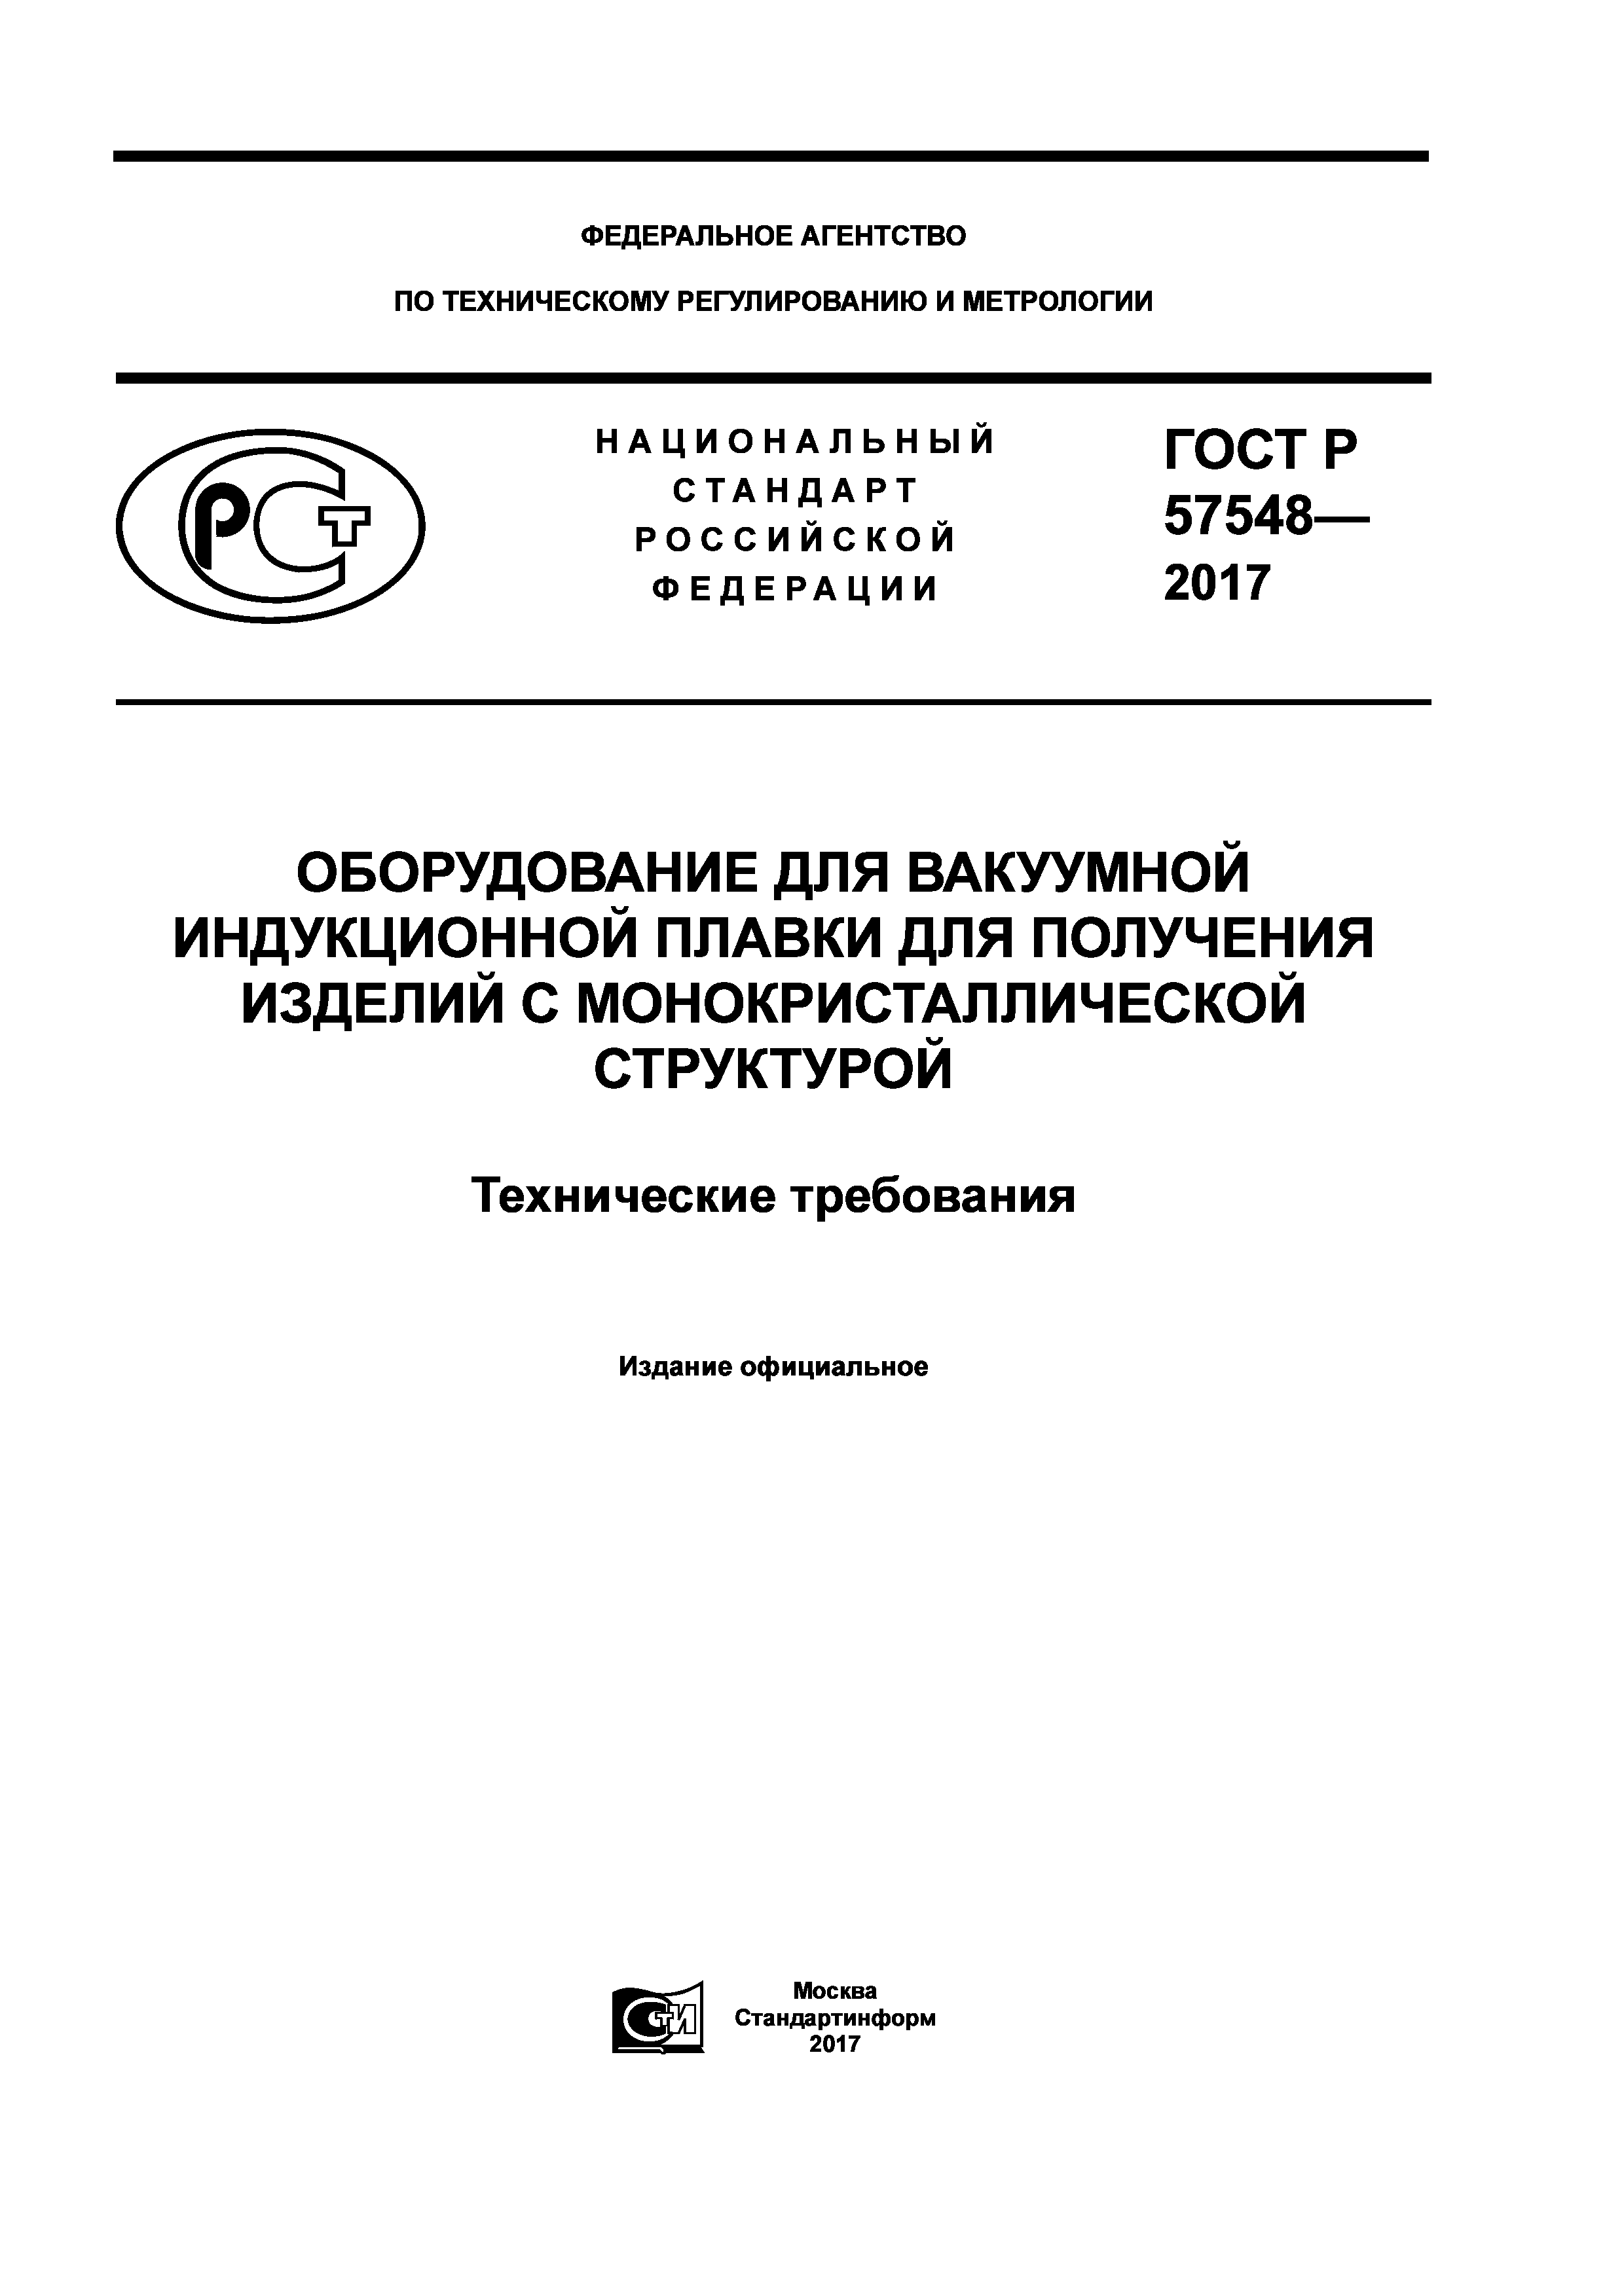 ГОСТ Р 57548-2017